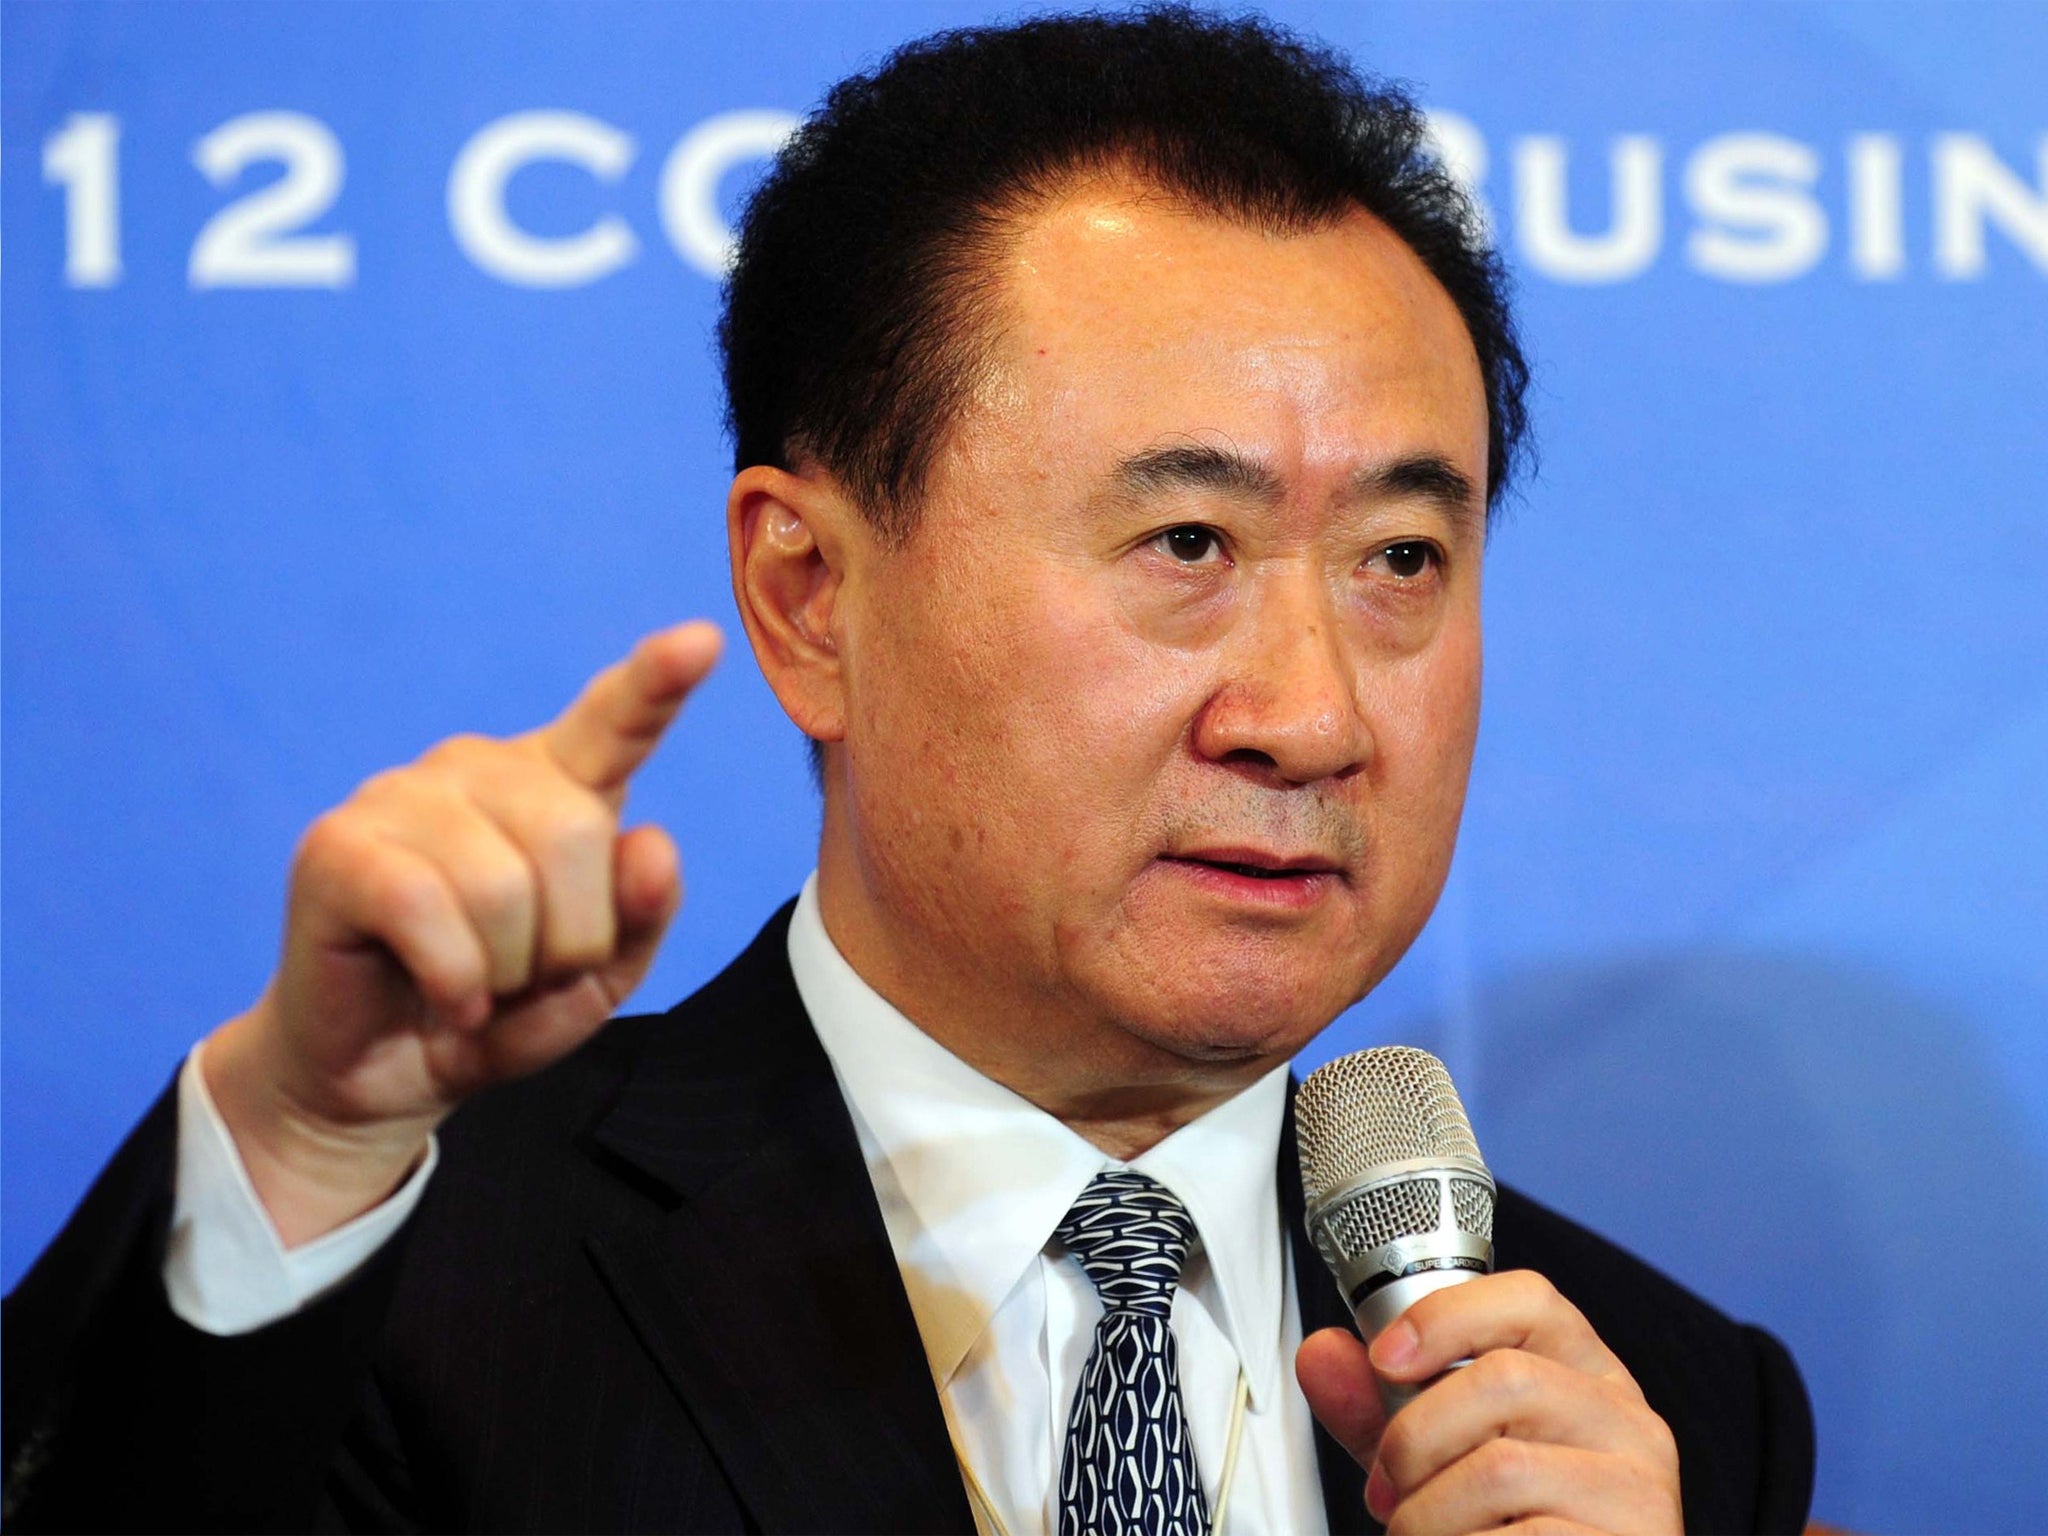 Wang Jianlin is worth £8.9bn according to Forbes